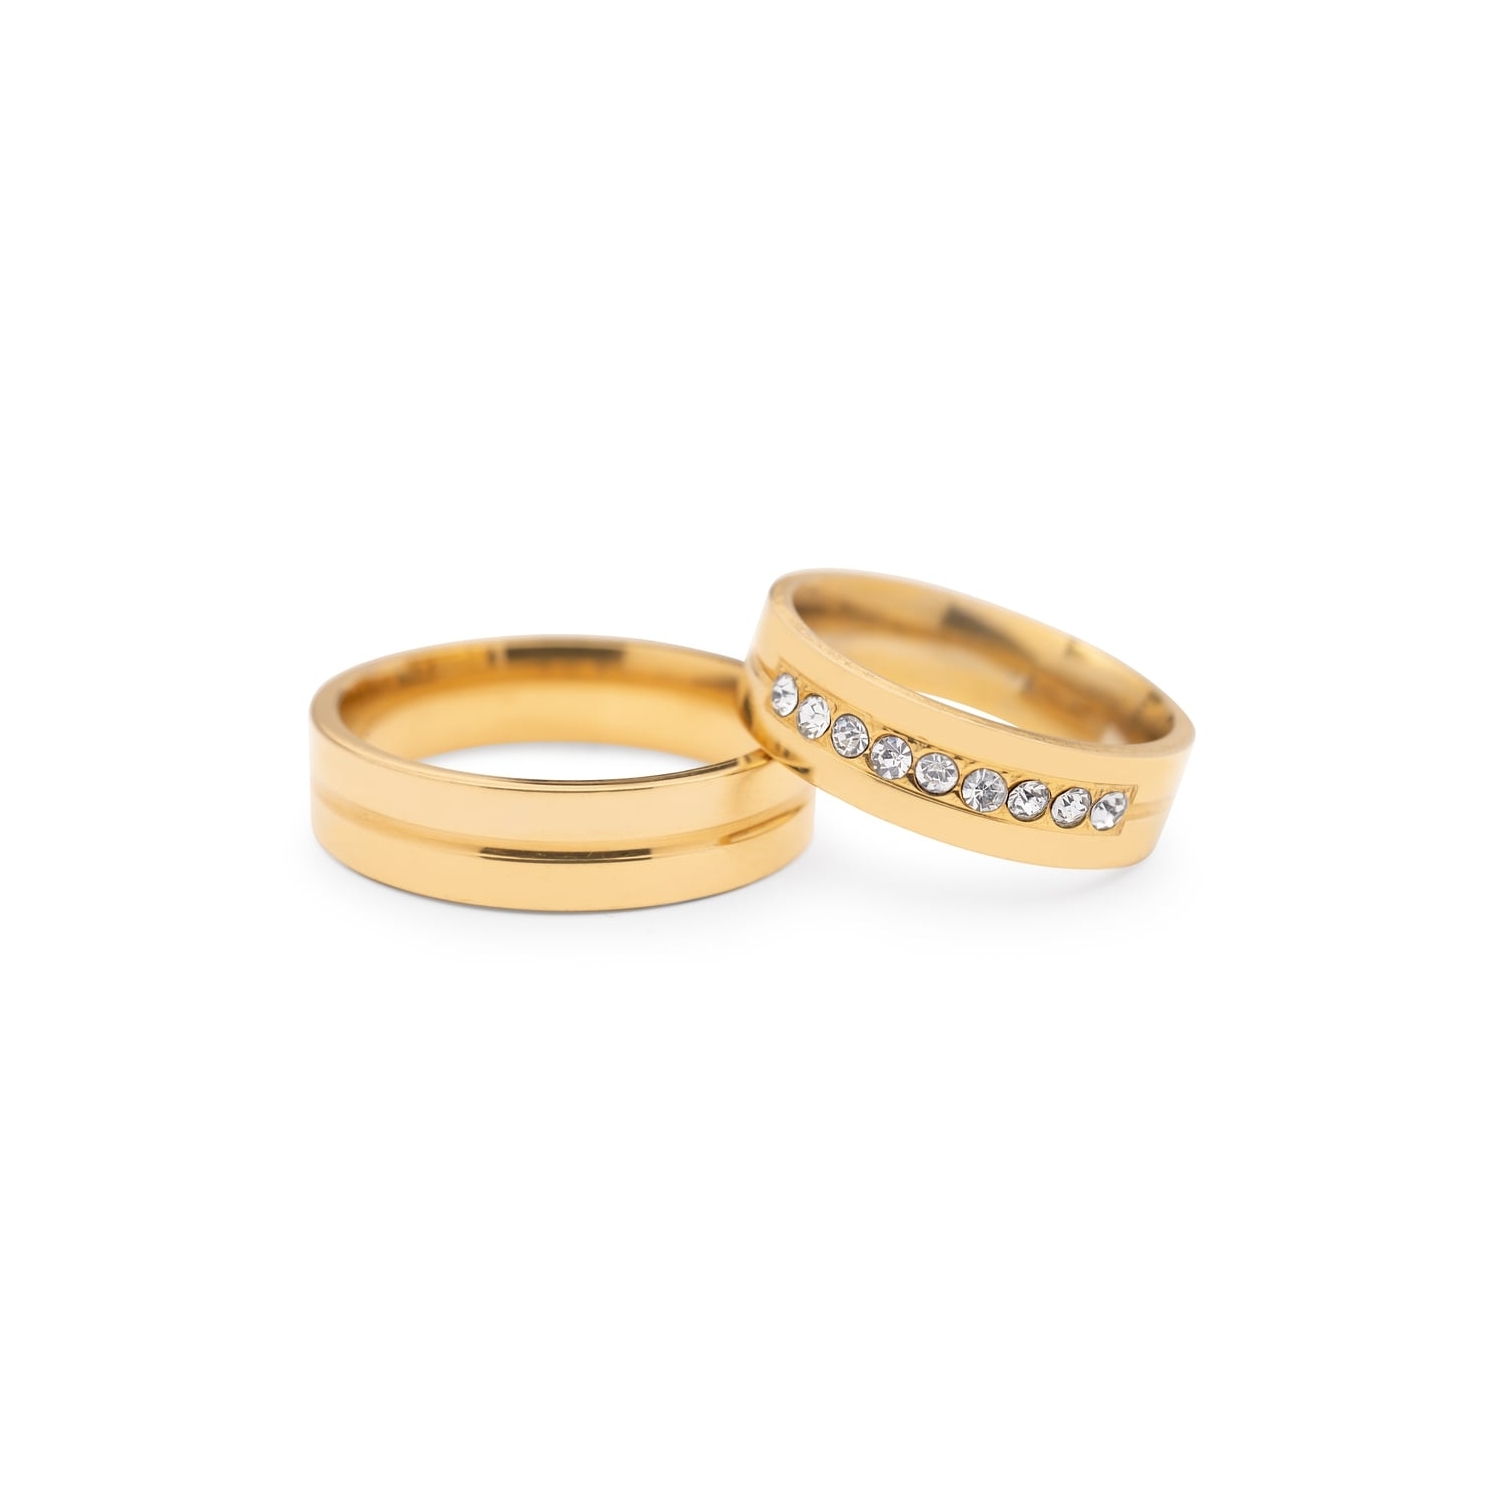 Golden wedding rings with diamonds "VMA 116"